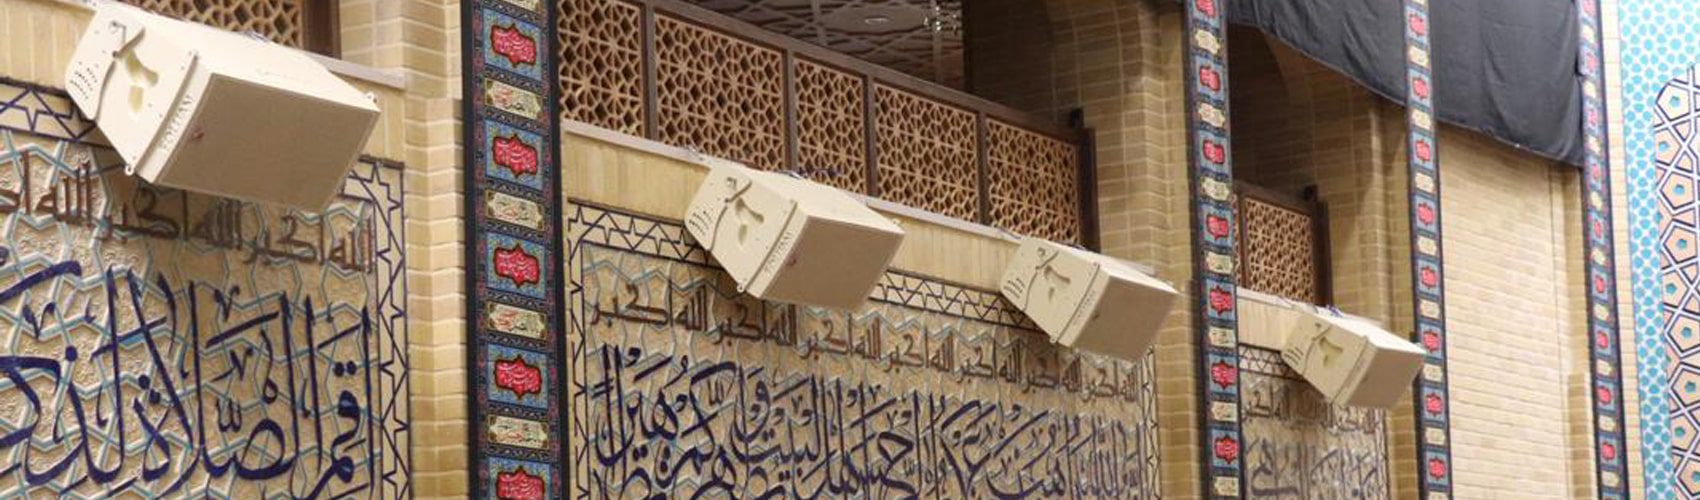 سیستم صوت جانبی مسجد بقة الله - شبستان